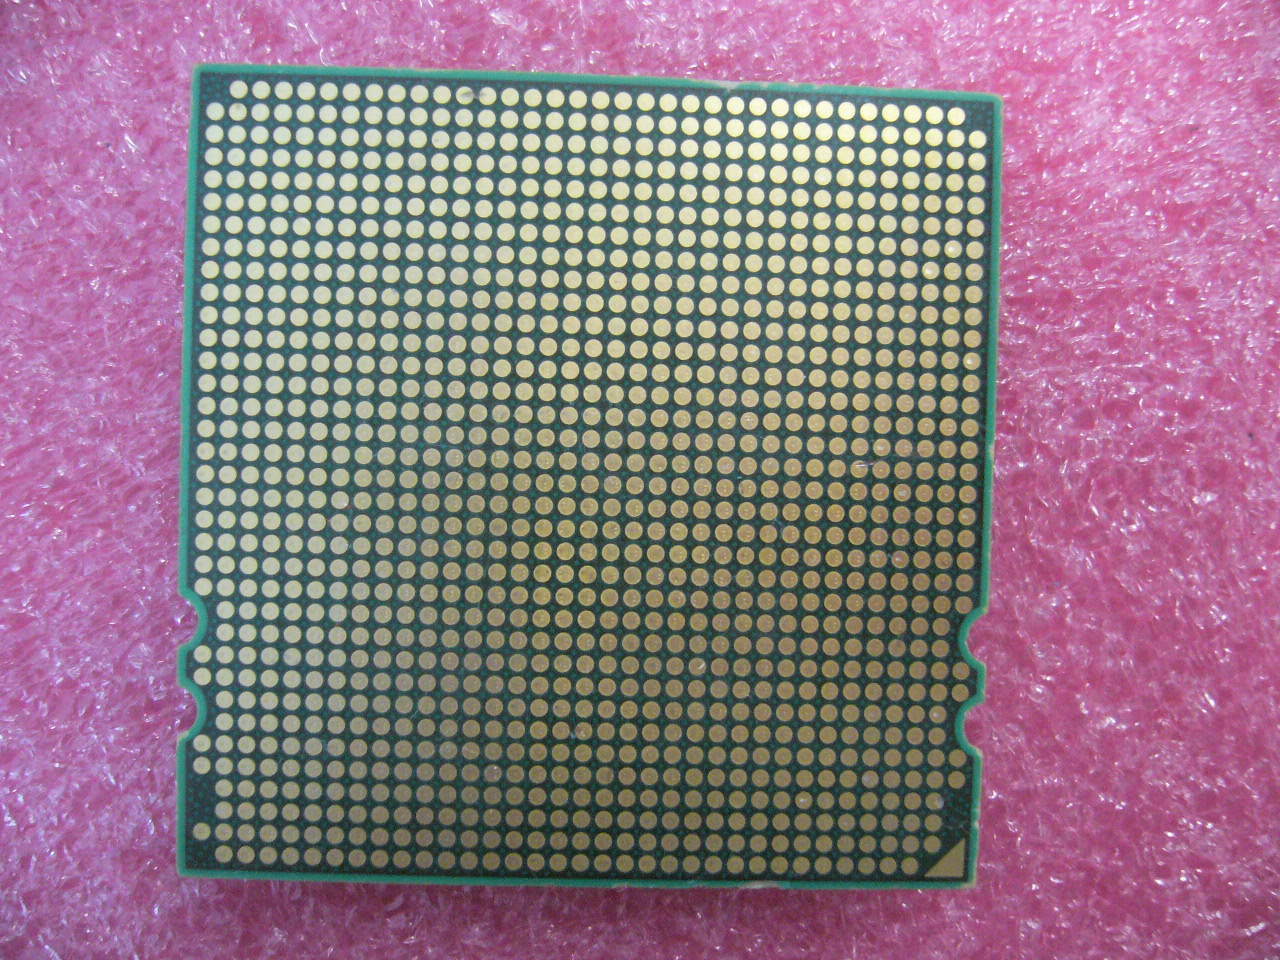 QTY 1x AMD Opteron 2386 2.8 GHz Quad-Core (OS2386YAL4DGI) CPU Socket F 1207 - zum Schließen ins Bild klicken